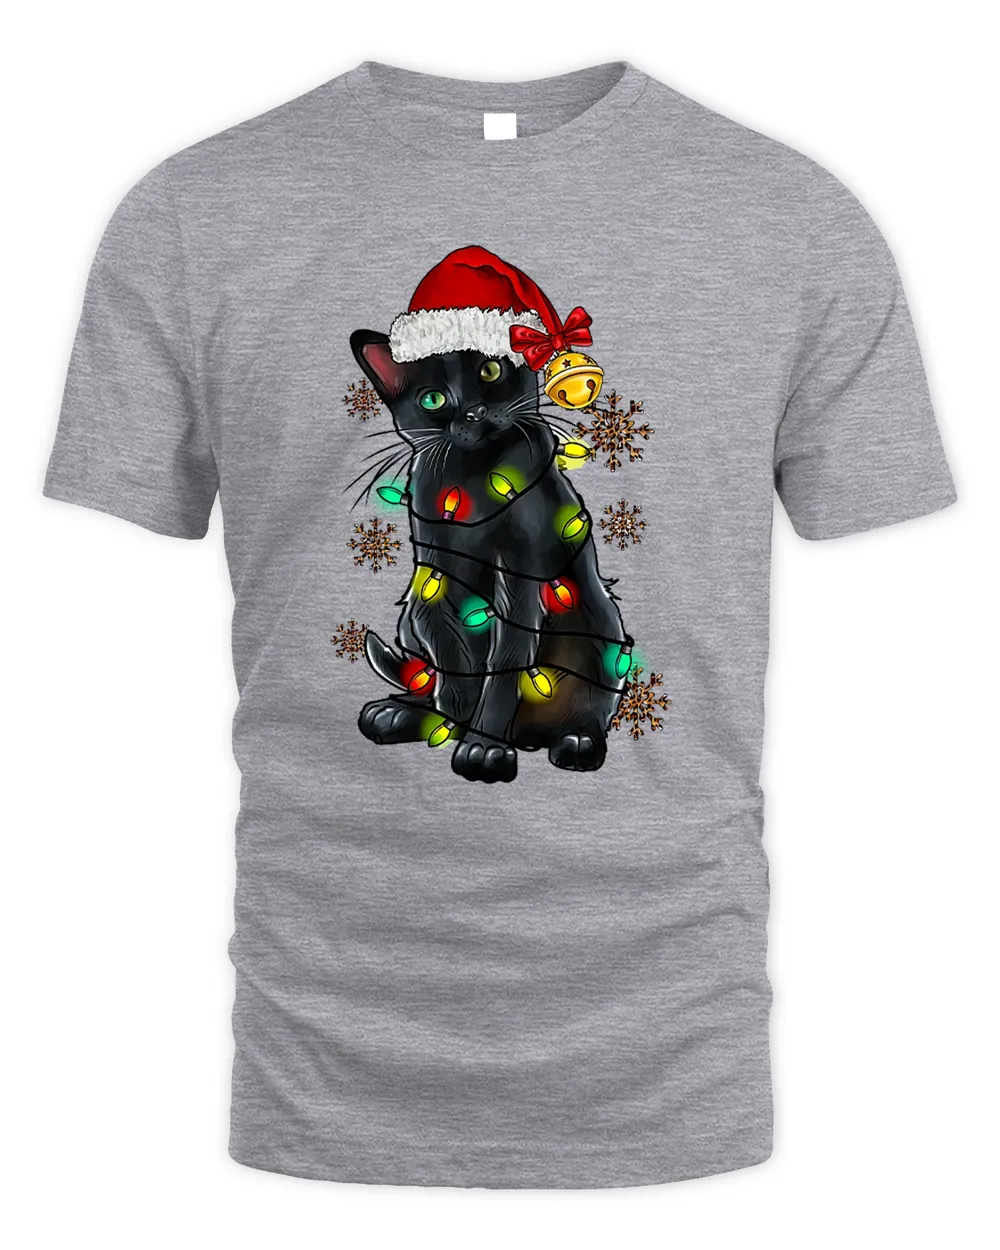 Black cat christmas shirt